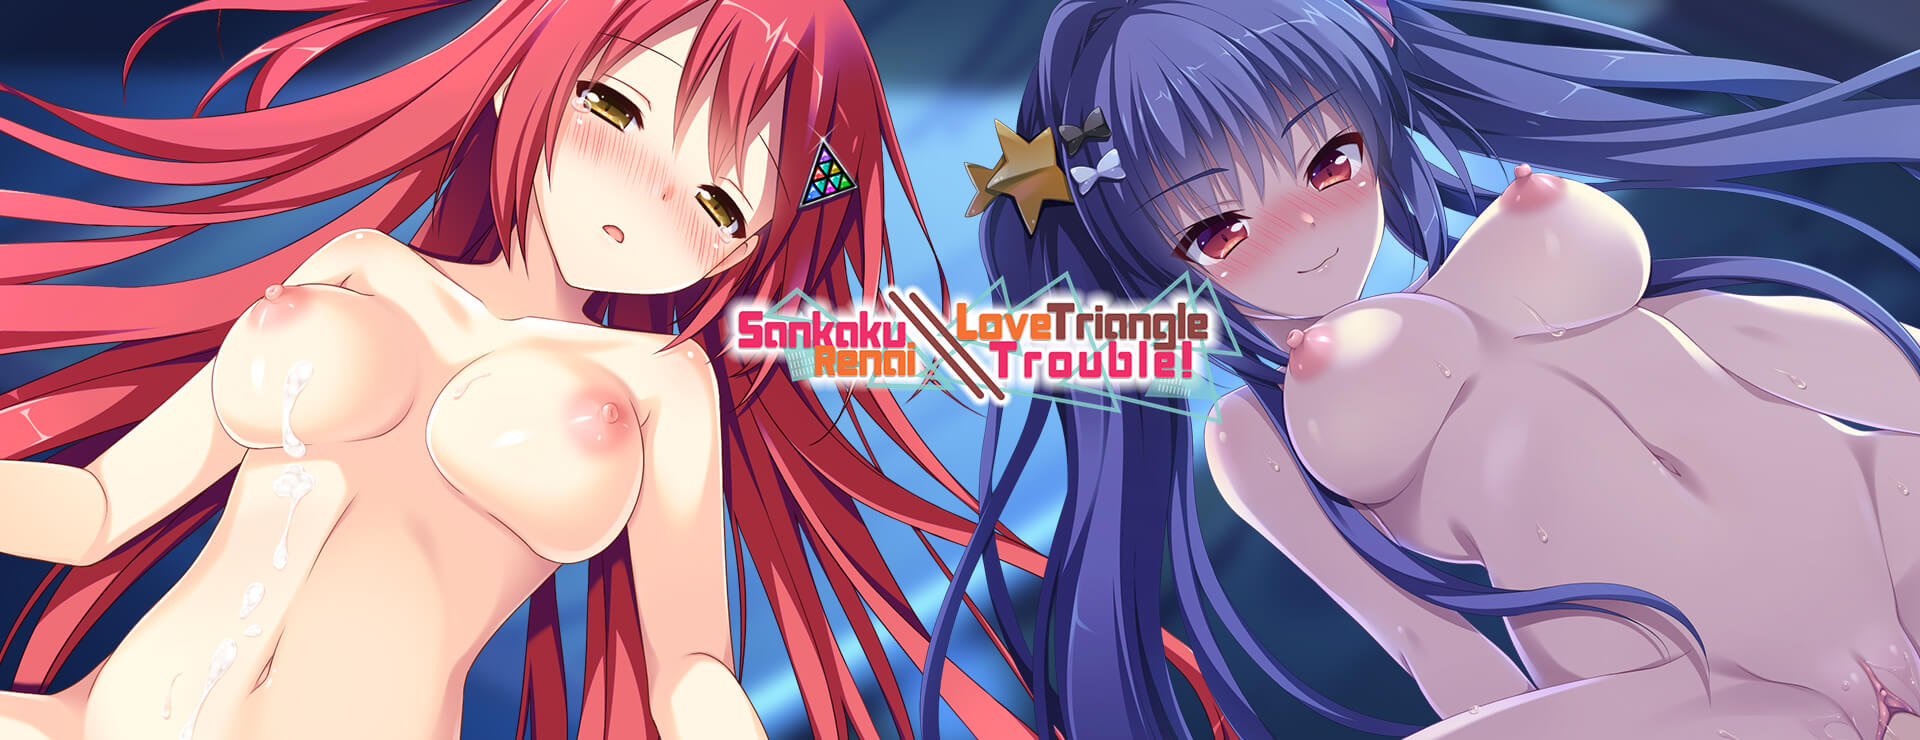 Sankaku Renai - Love Triangle Troubles - Novela Visual Juego